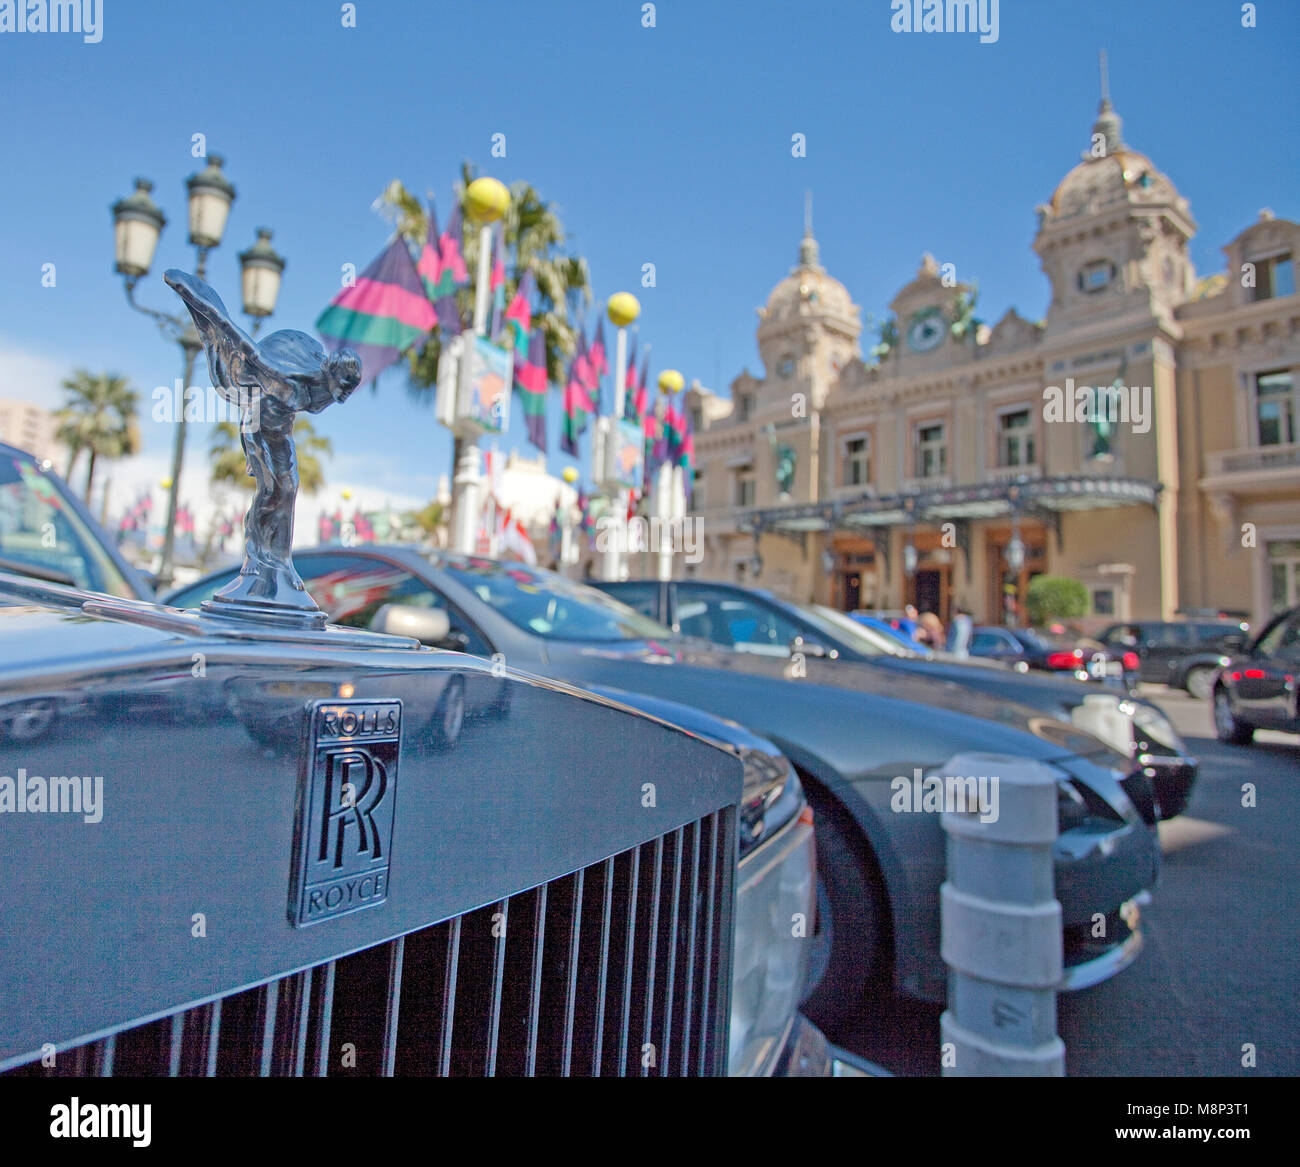 Bonnet mascot of Rolls Royce car at Casino Monte-Carlo, Place du Casino, Monte Carlo, Principality of Monaco, Côte d'Azur, french riviera, Europe Stock Photo